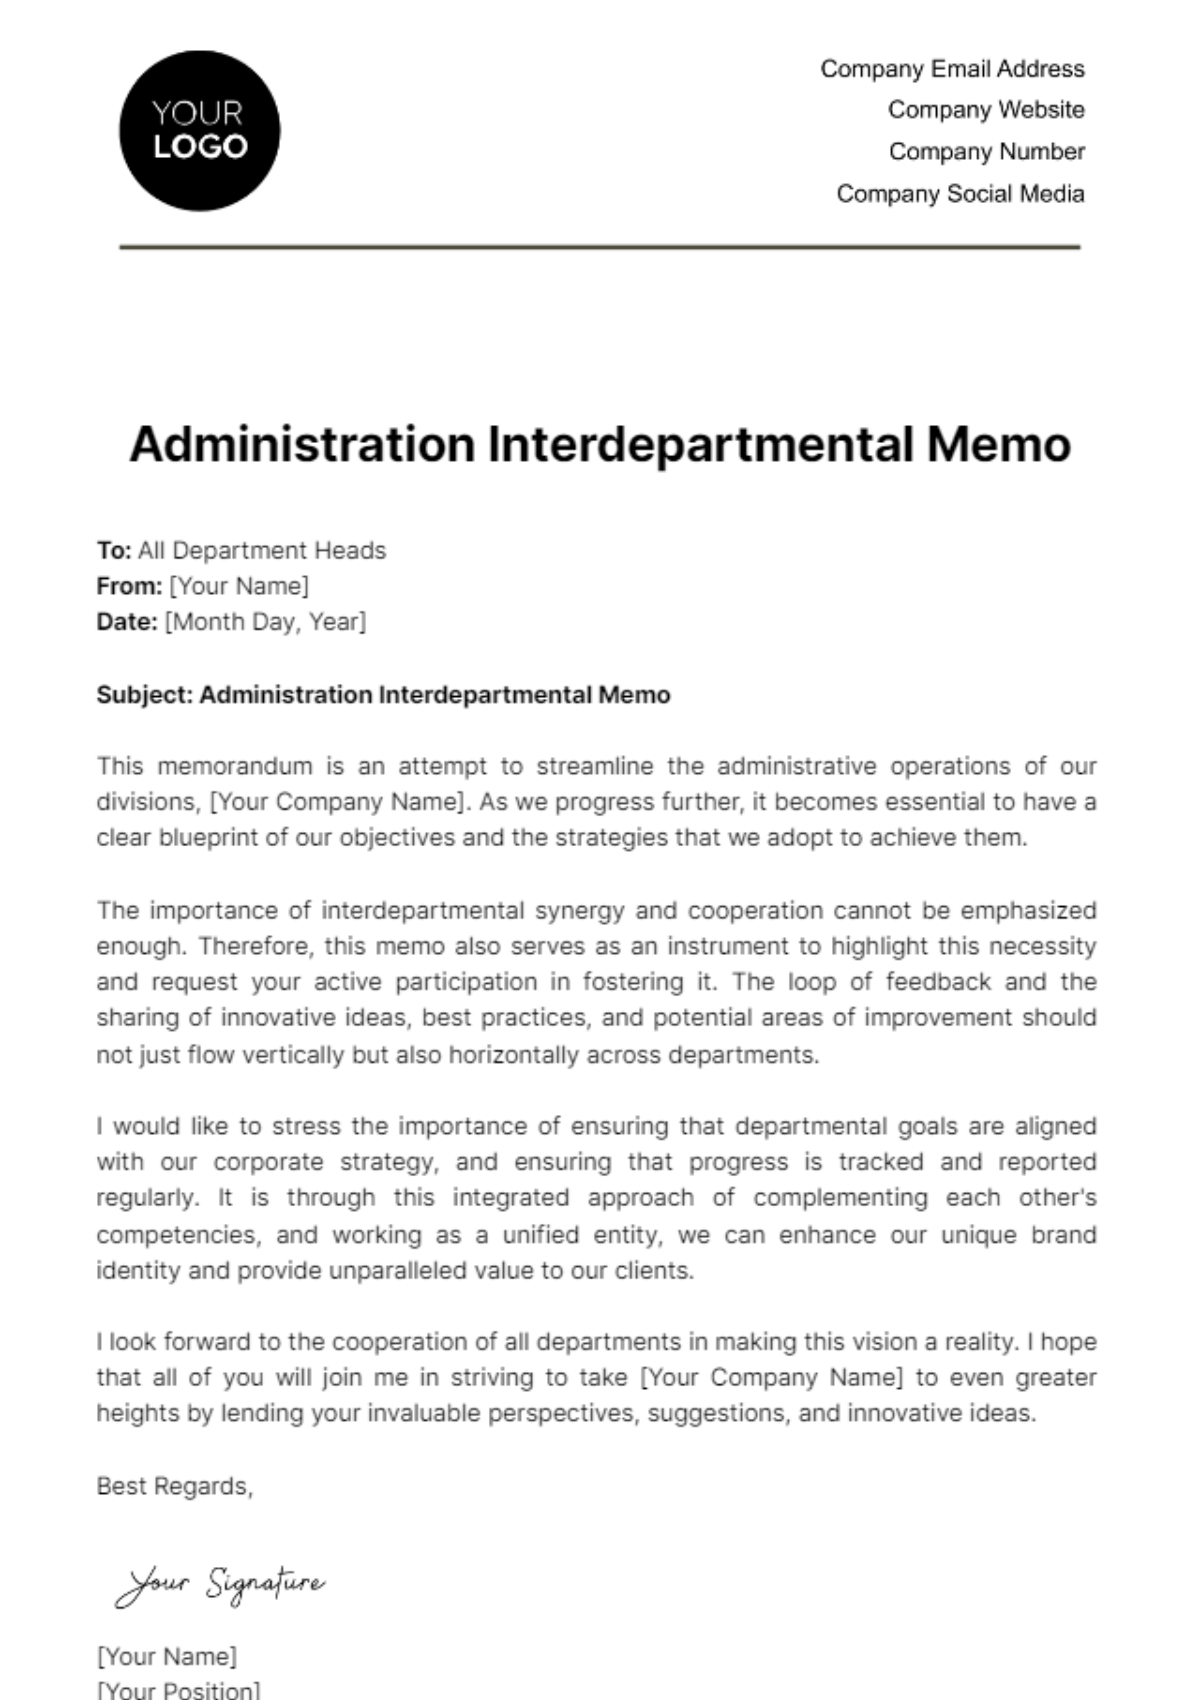 Administration Interdepartmental Memo Template